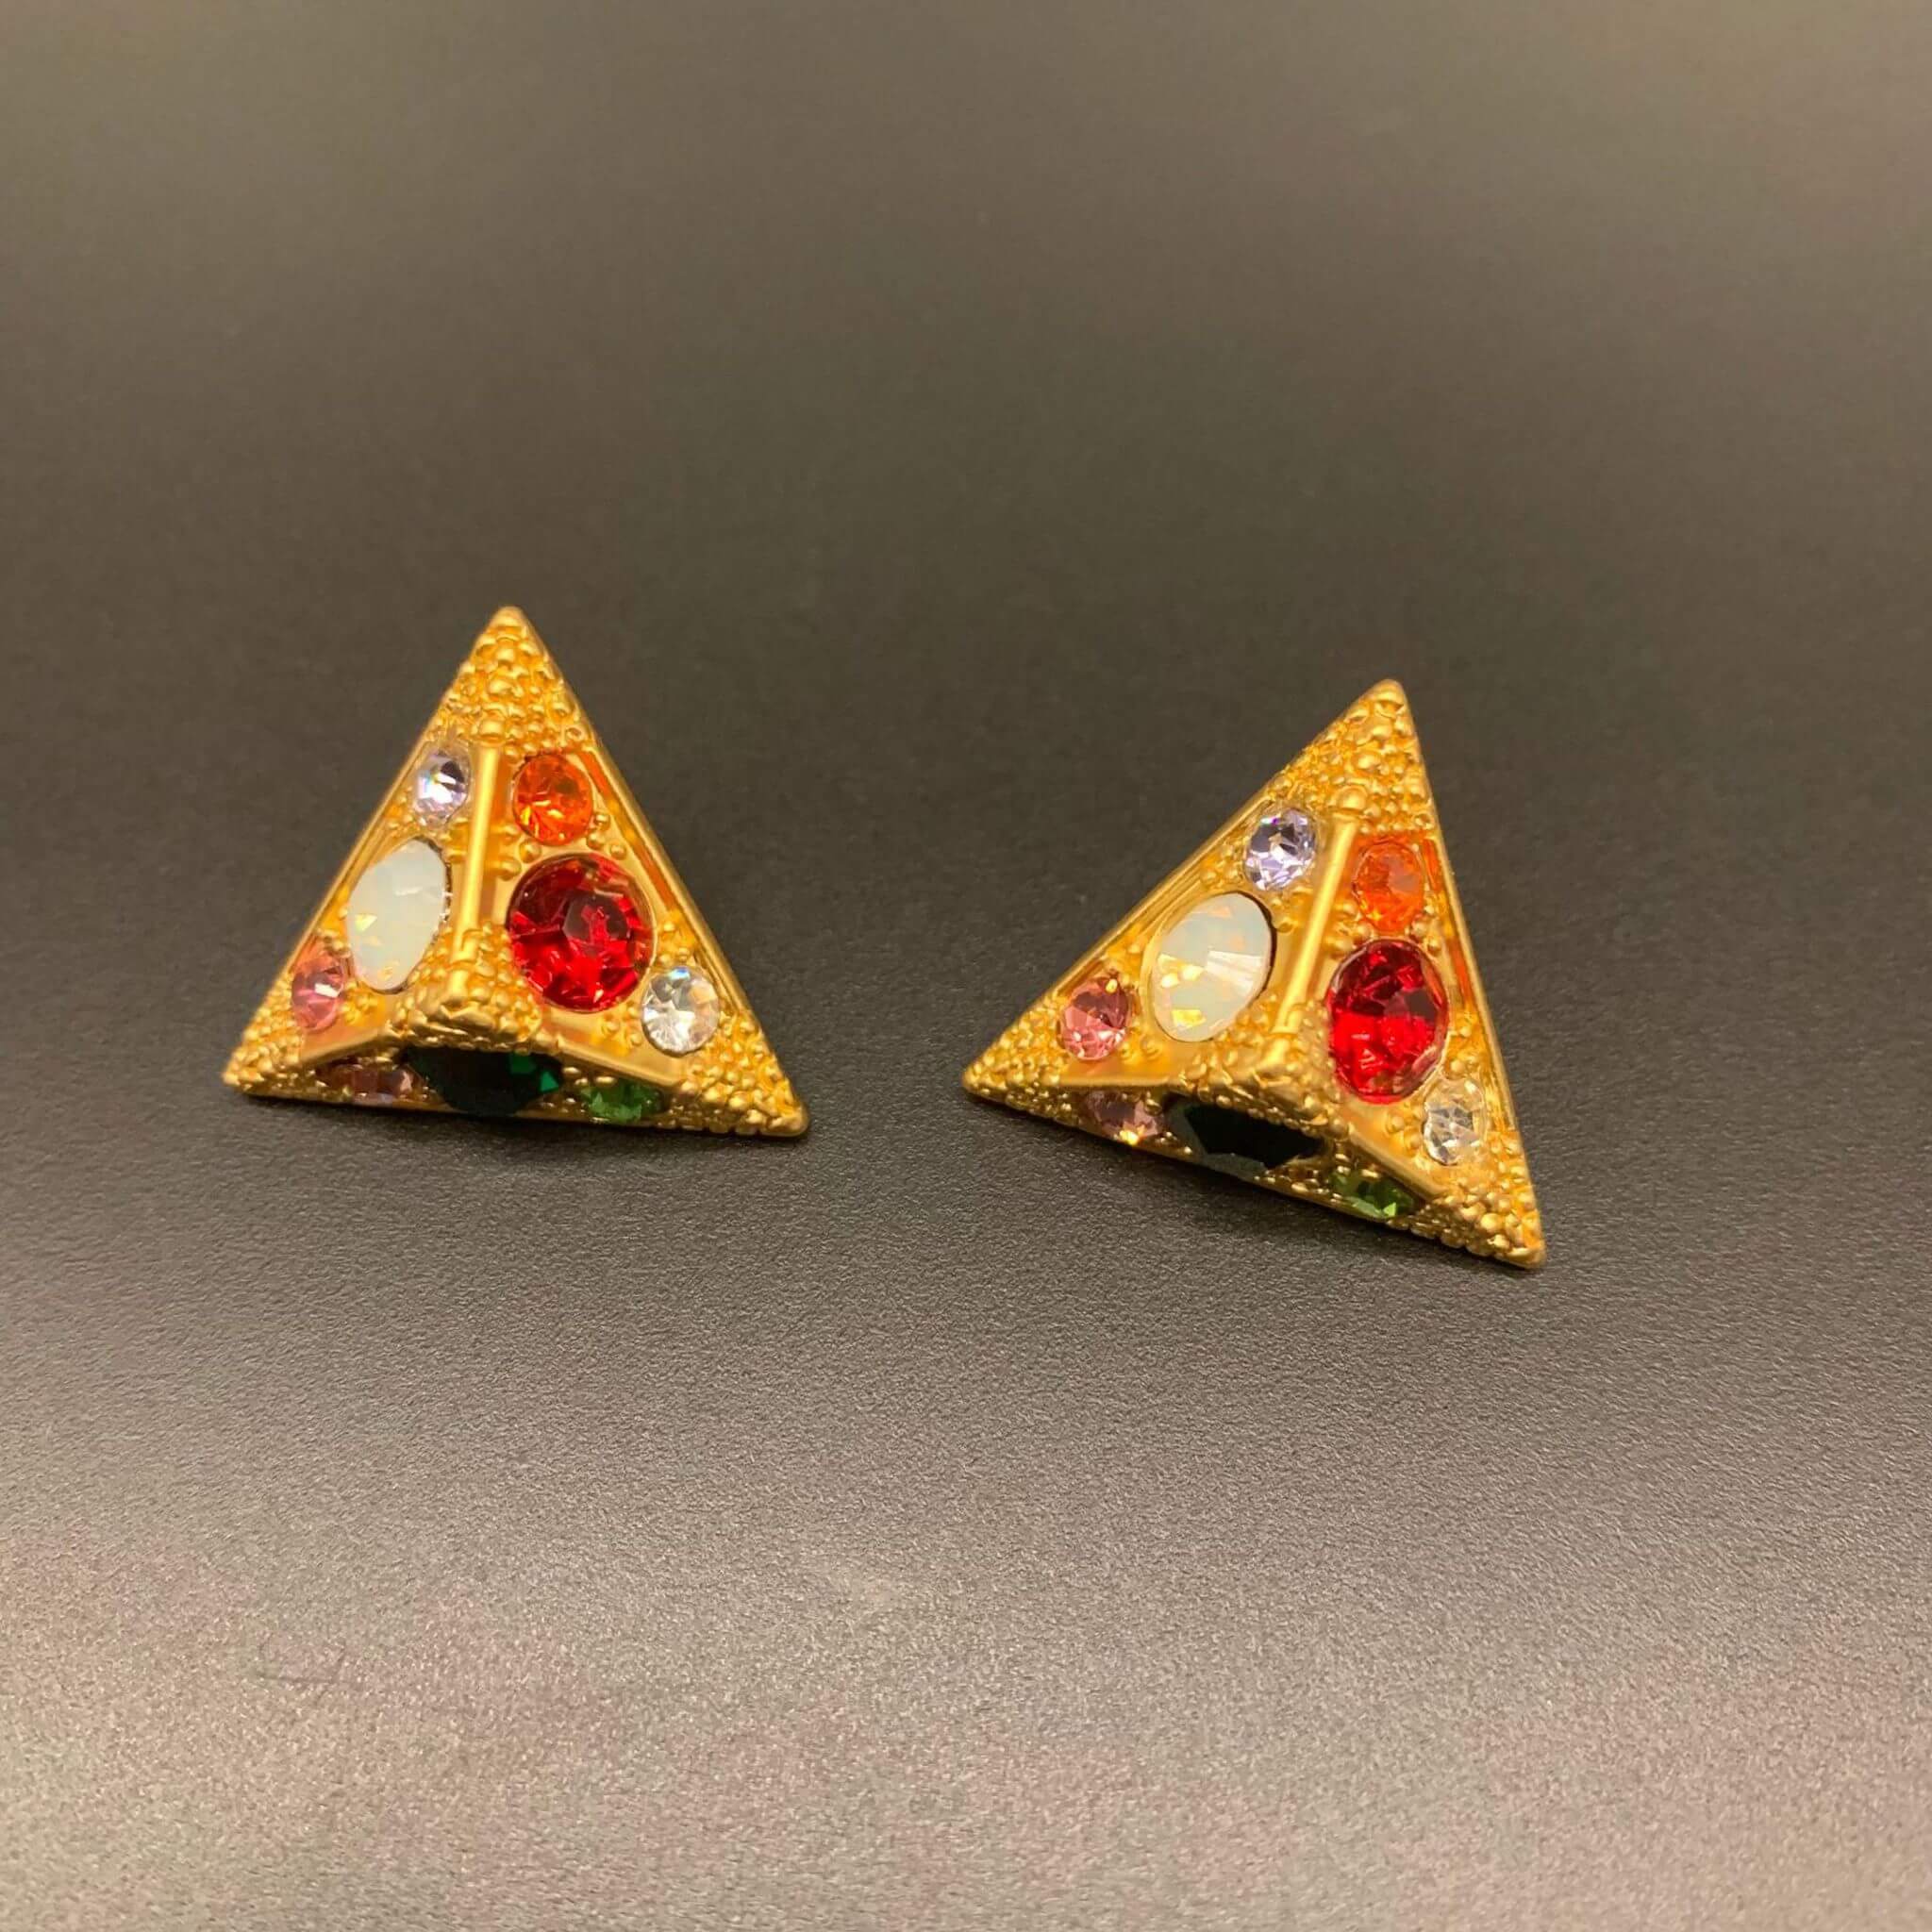 Vintage Rhinestone Inlaid Triangle Earrings - Retro Geometric Elegance  UponBasics   